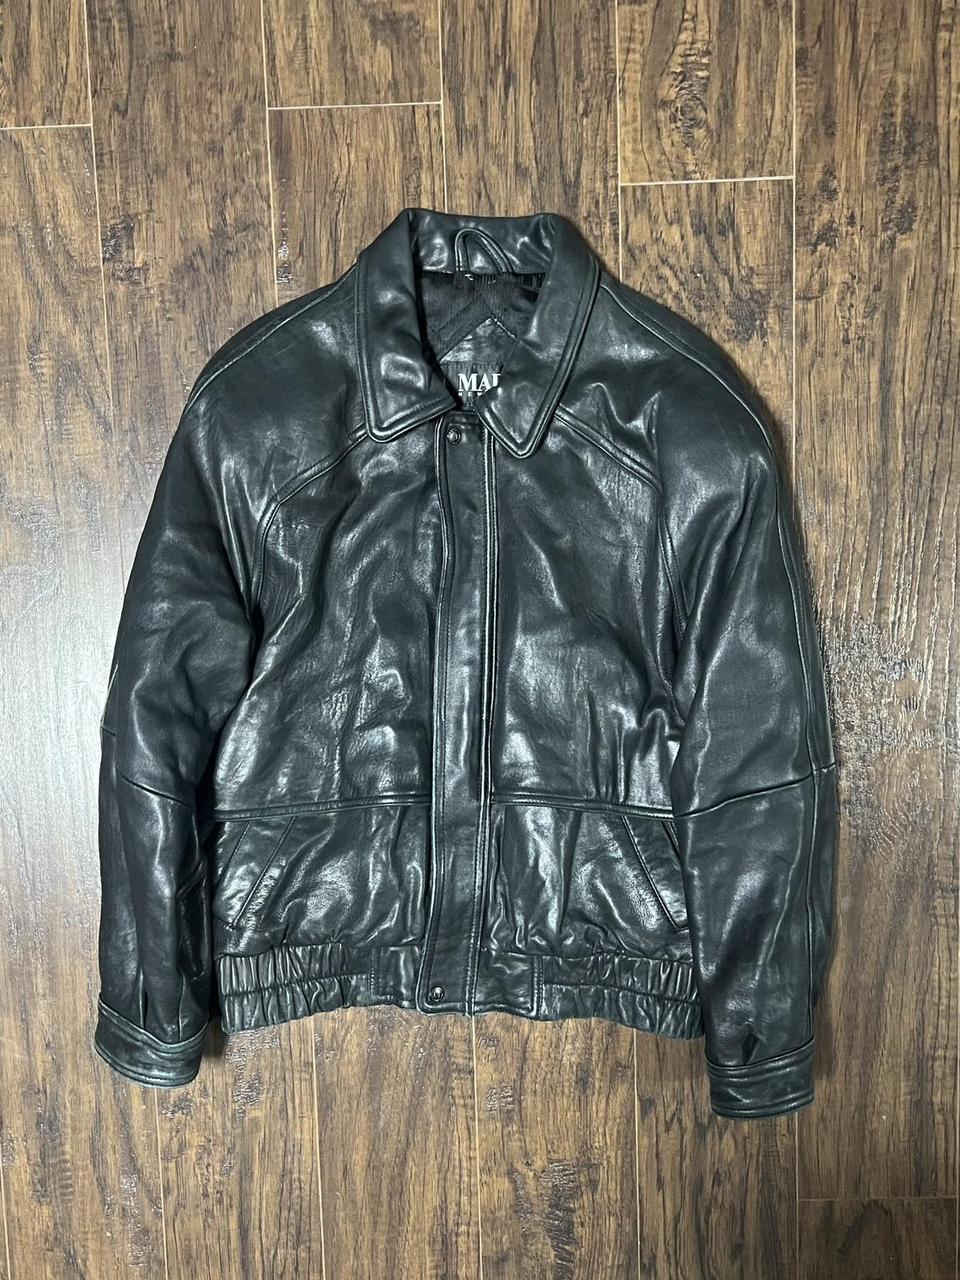 Vintage Medium Marc Bomber Leather Jacket This... - Depop